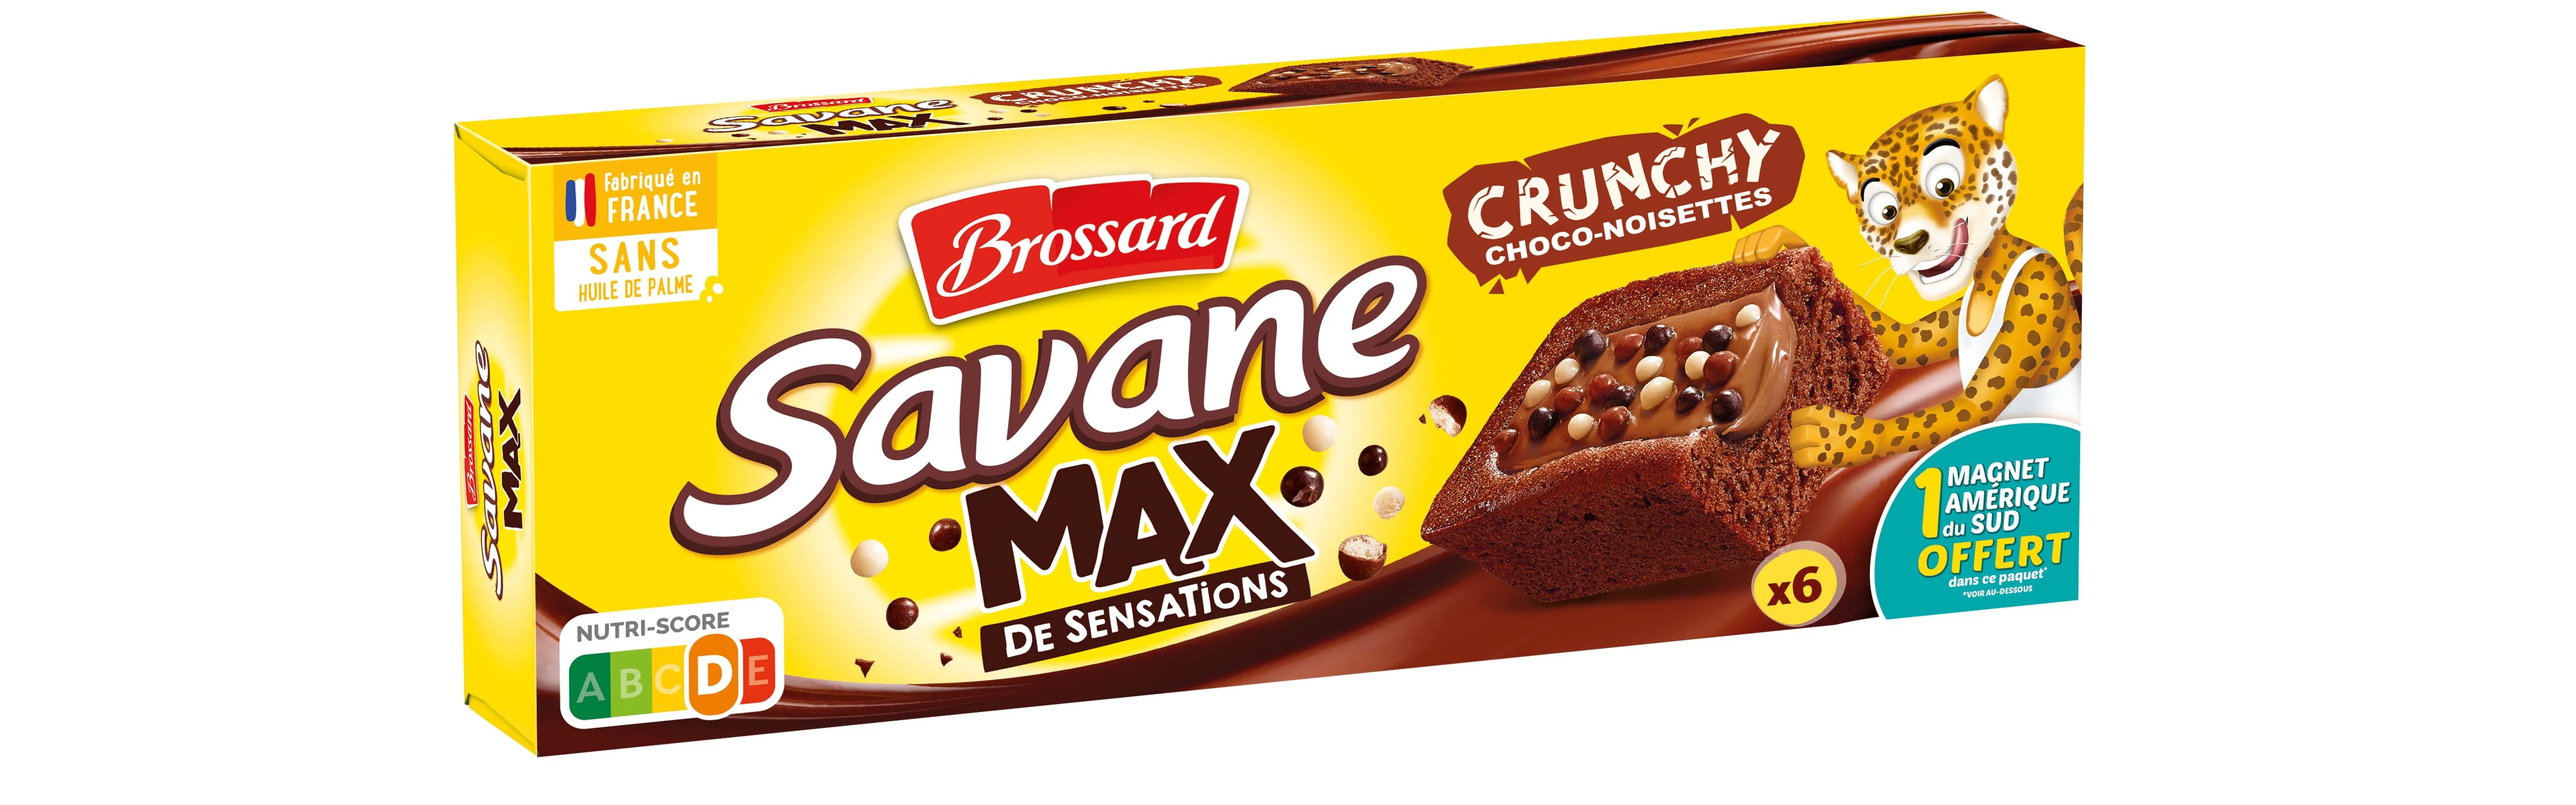 Savane Max Crunchy X 6 180g